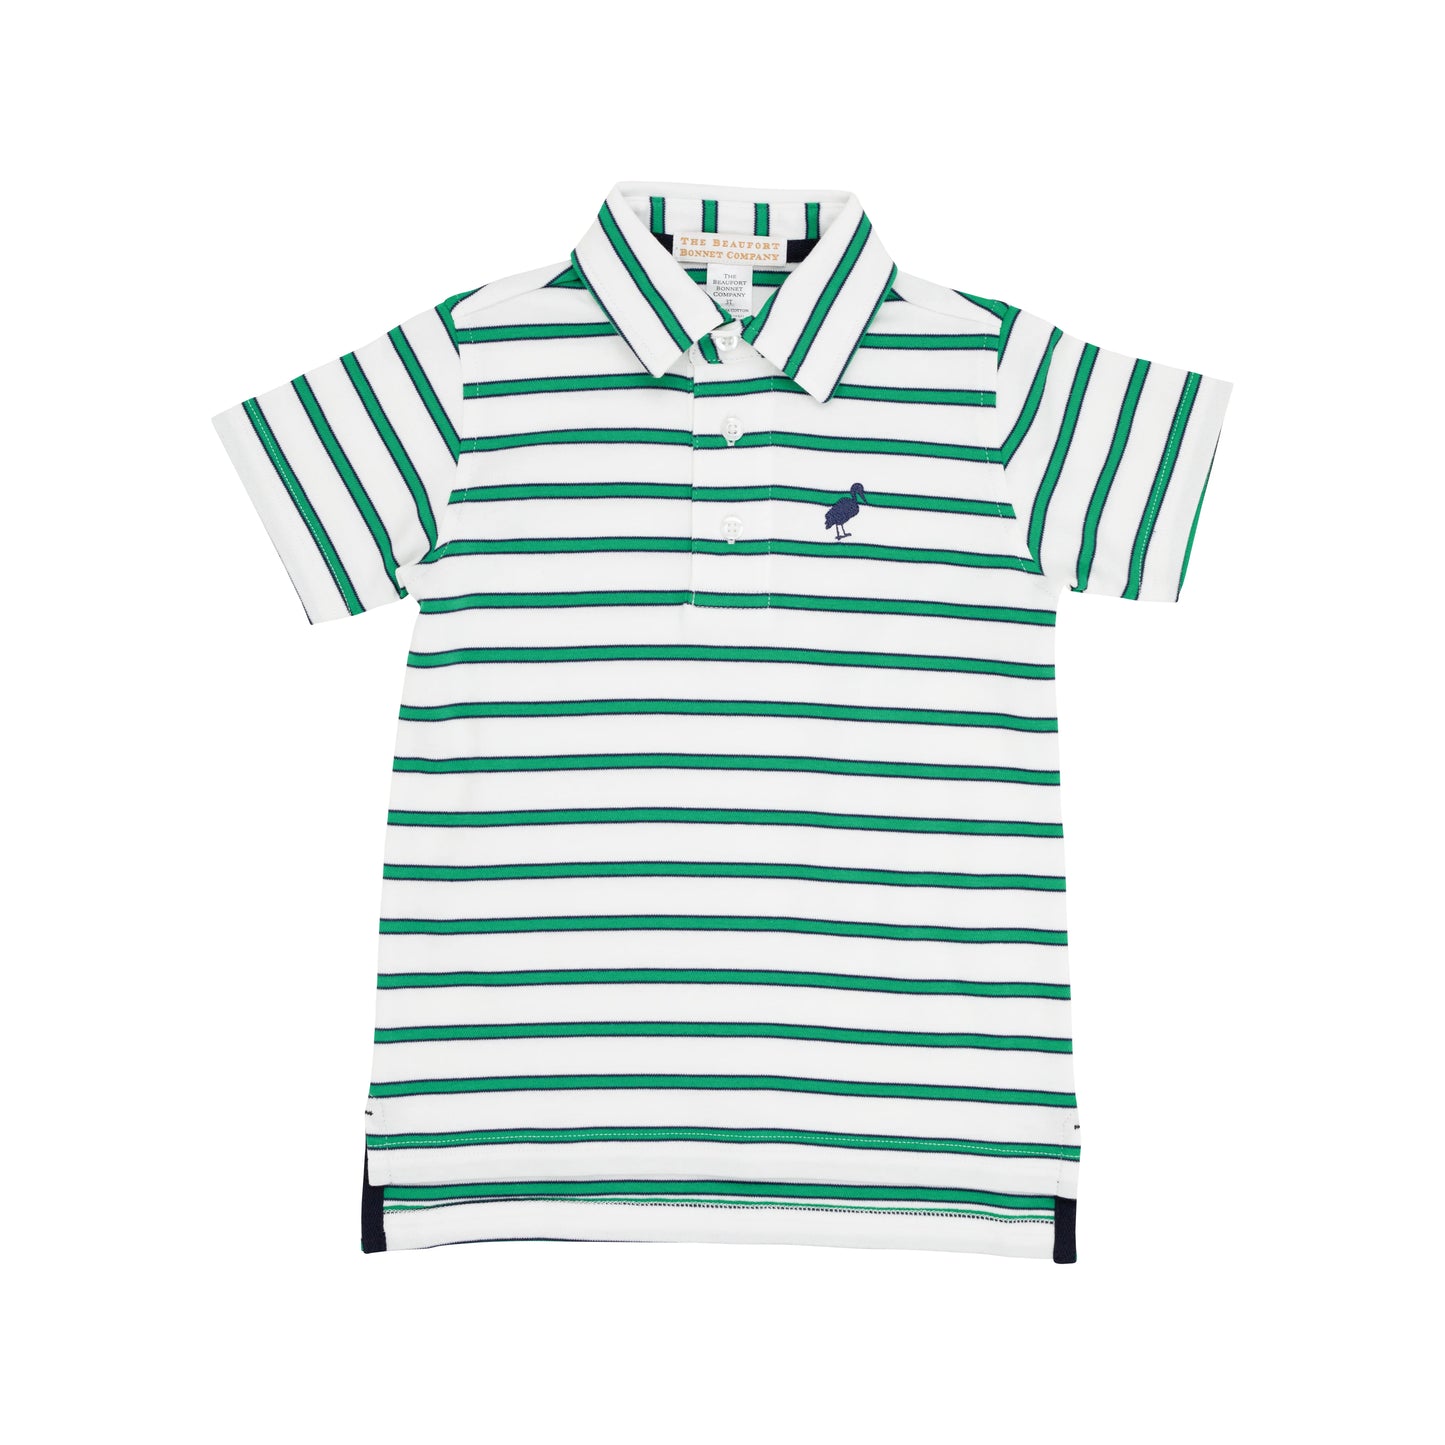 Prim & Proper Striped Polo - Short Sleeve